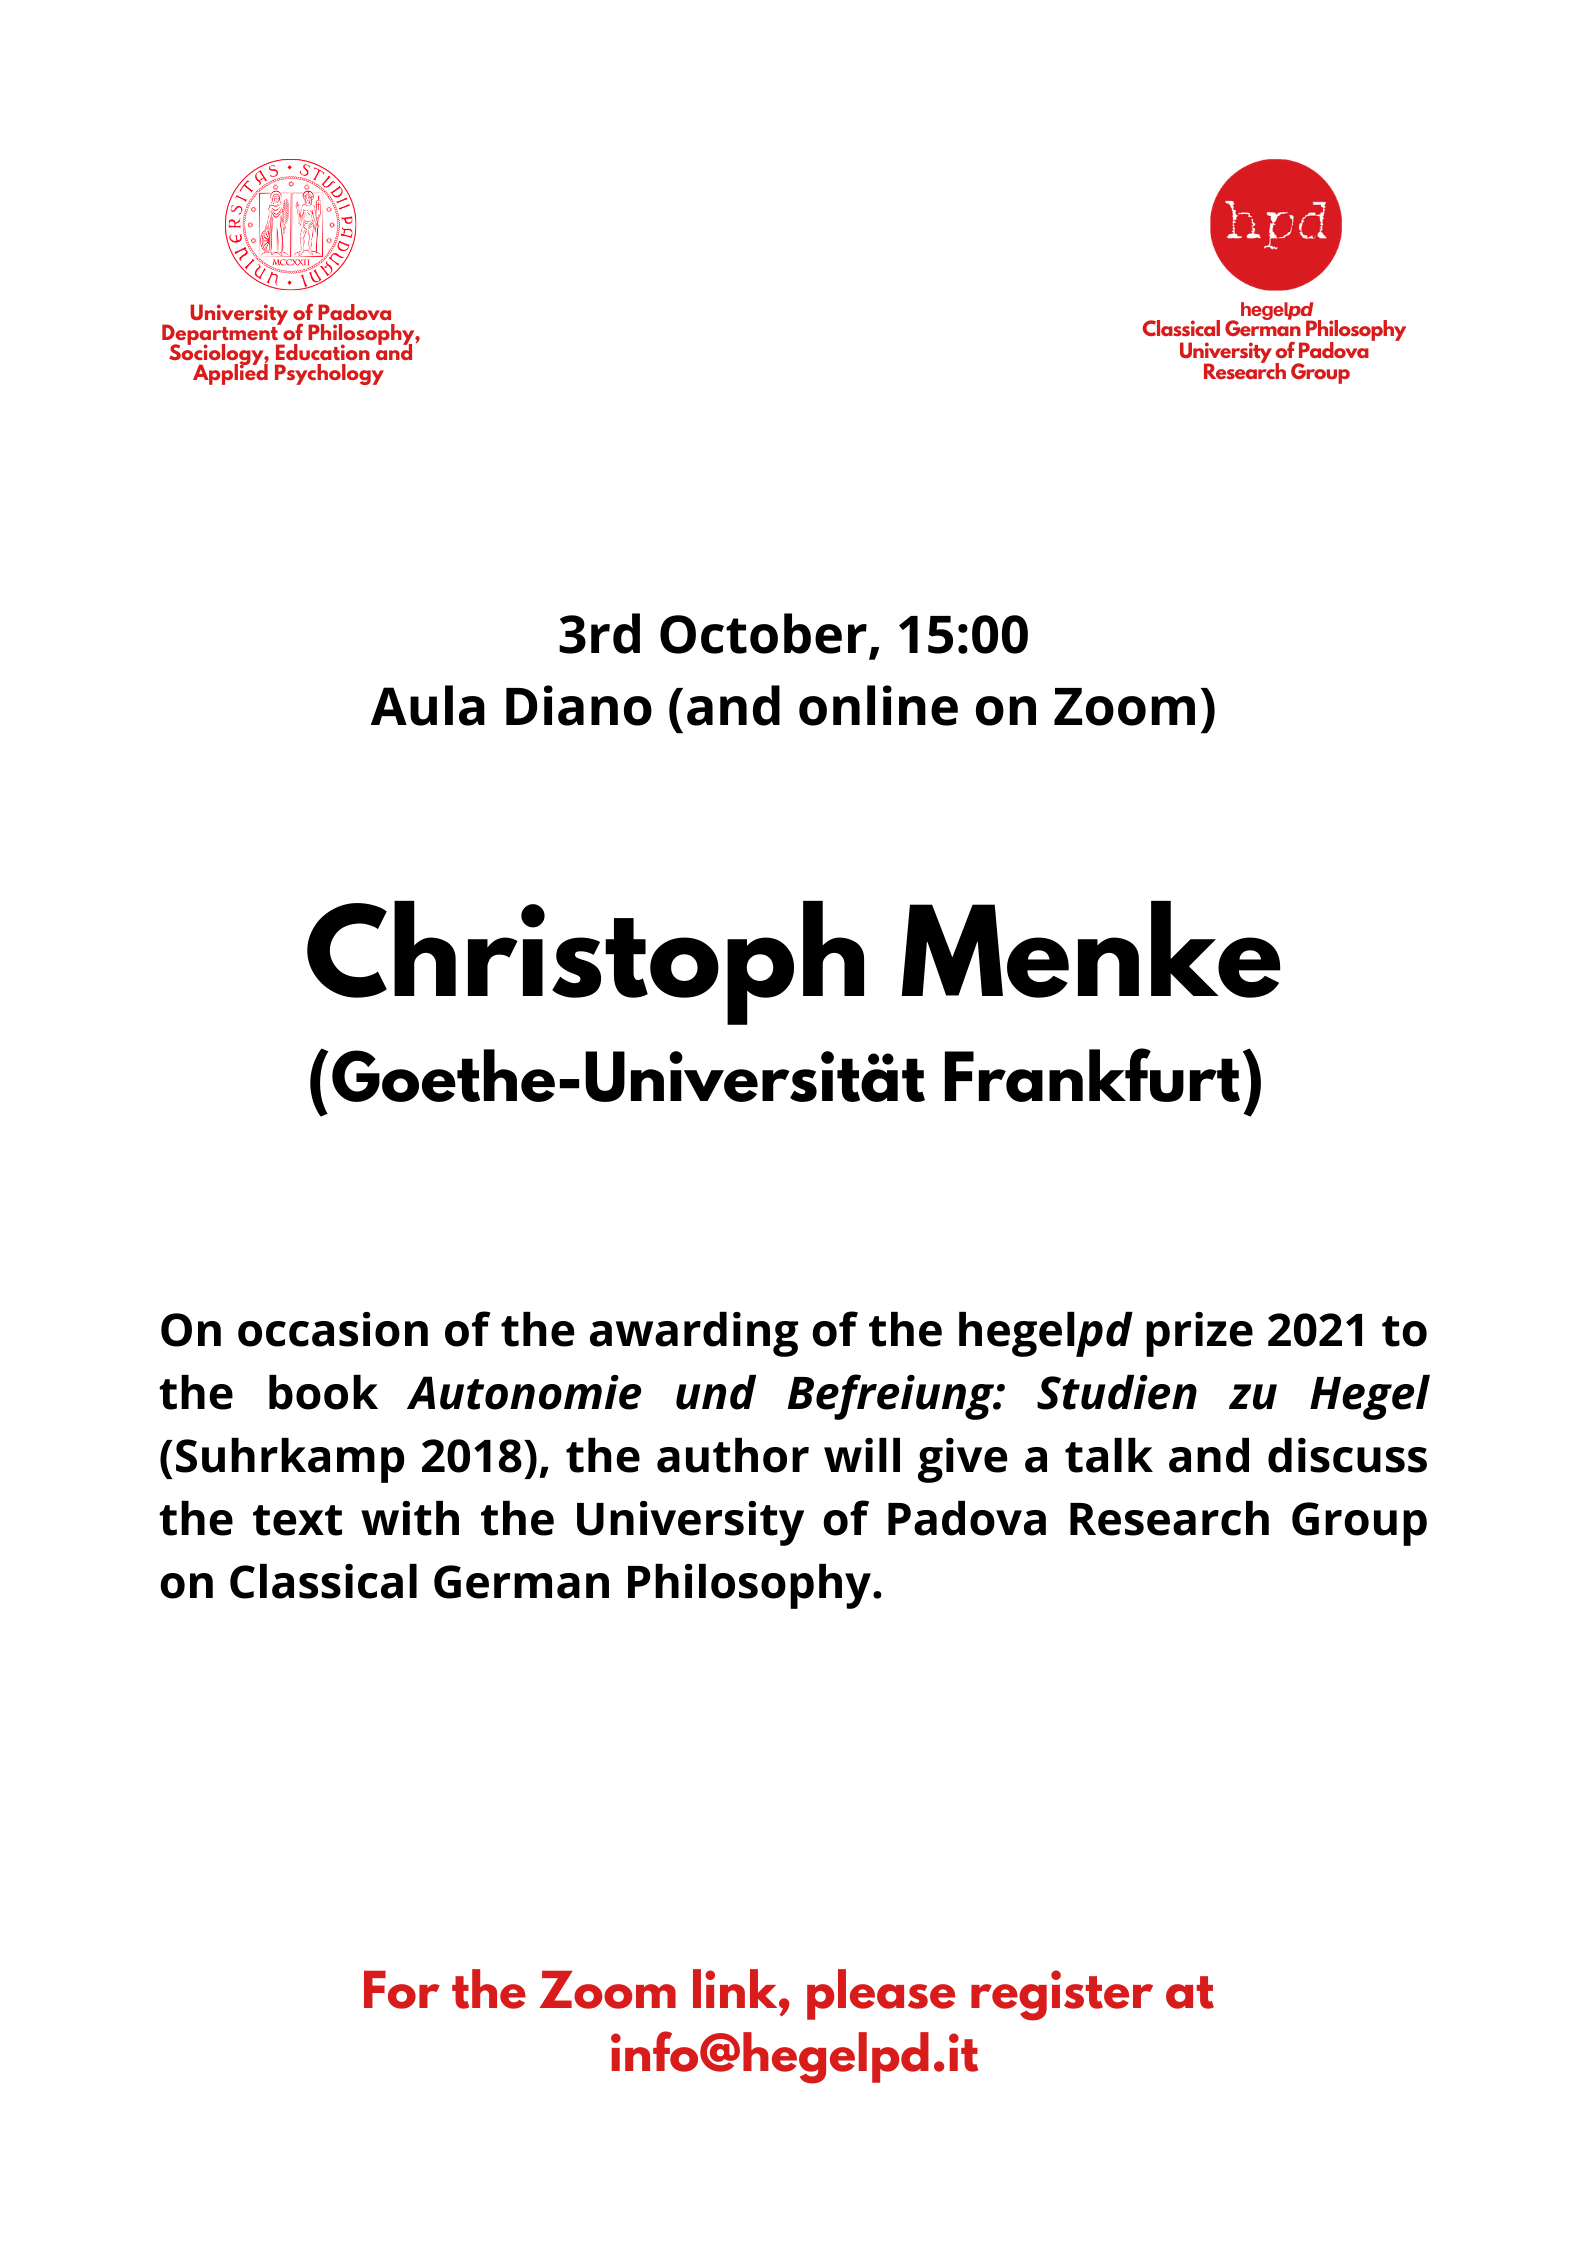 Book discussion hegelpd-prize 2021: Christoph Menke, “Autonomie und Befreiung. Studien zu Hegel” (Padova, 3 October 2022)